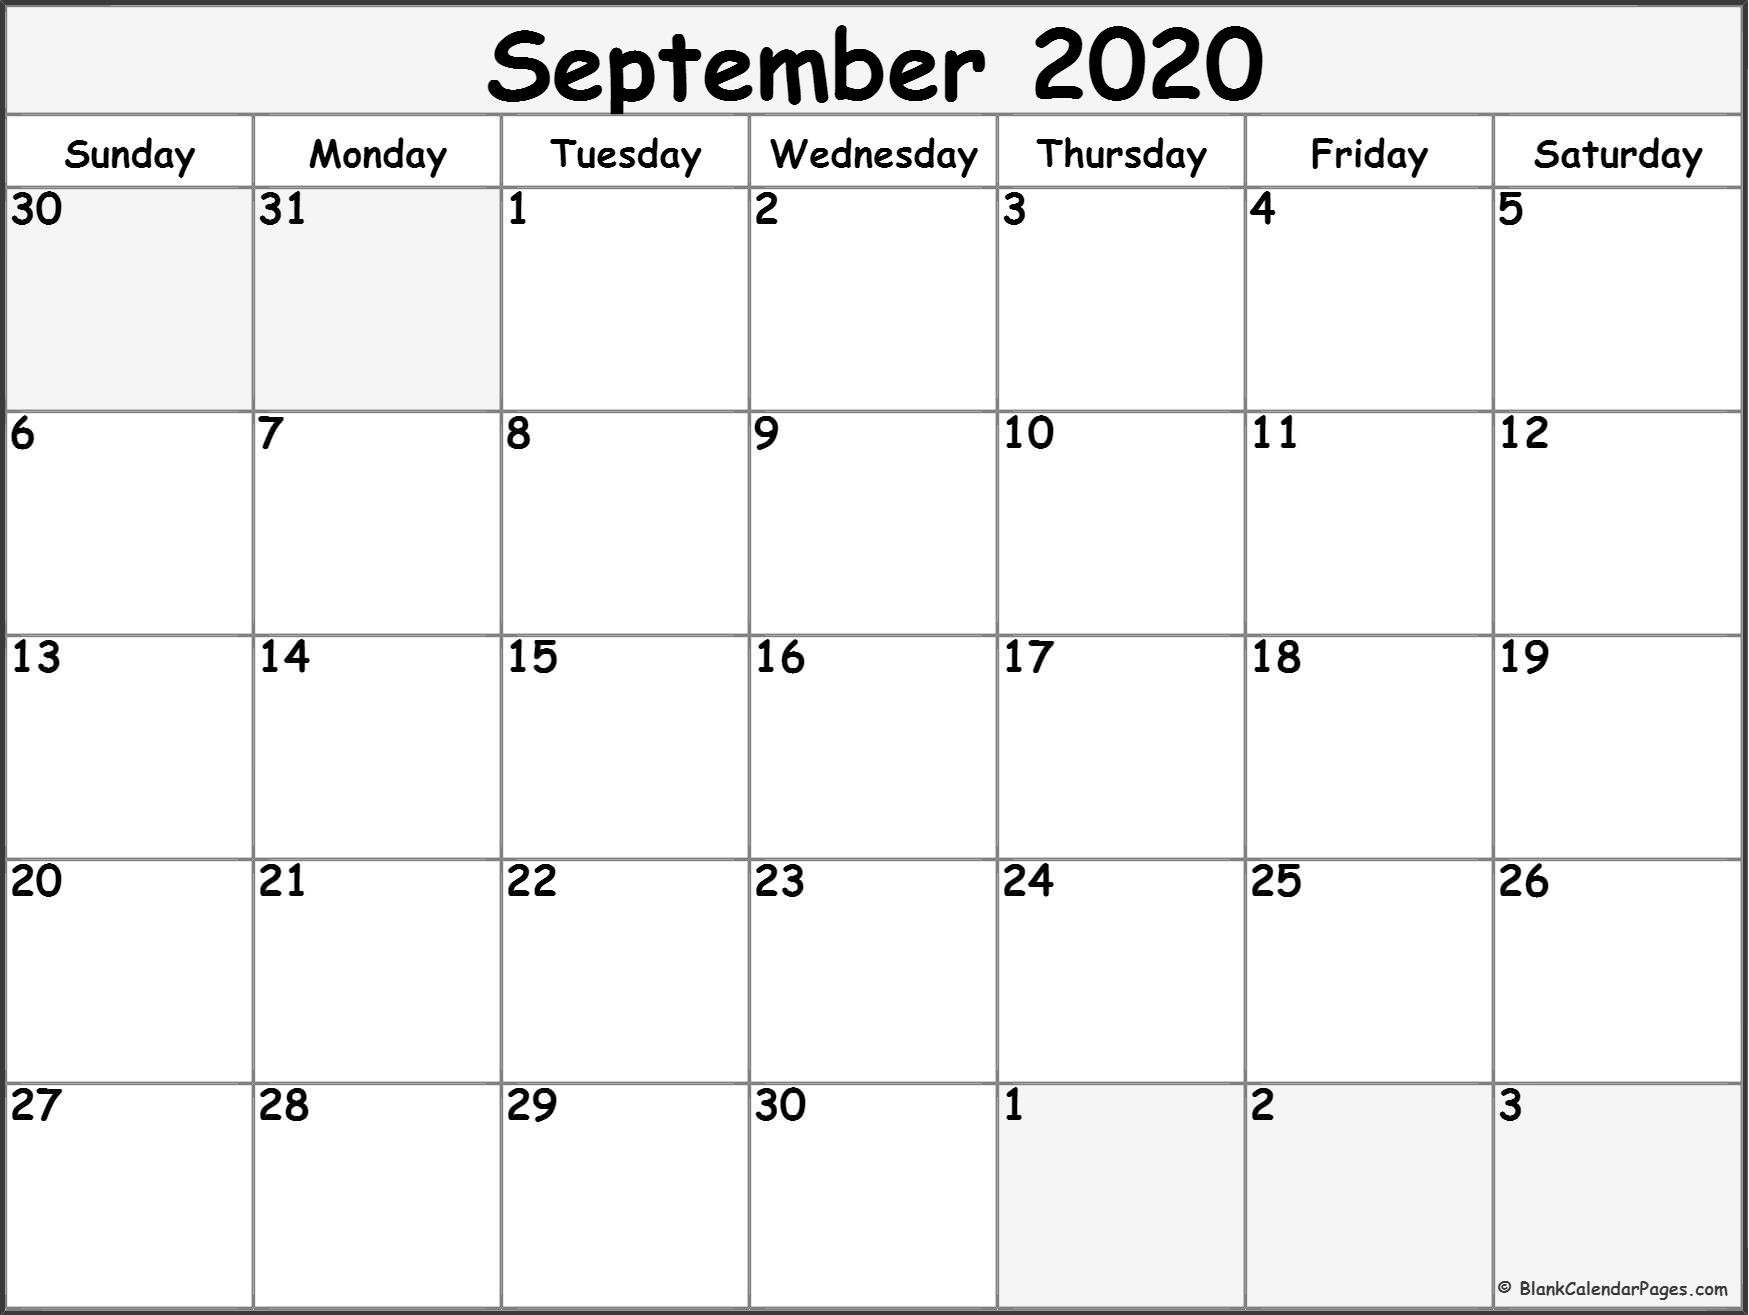 September 2020 Calendar | Free Printable Monthly Calendars-Google Calendar September 2020 Template